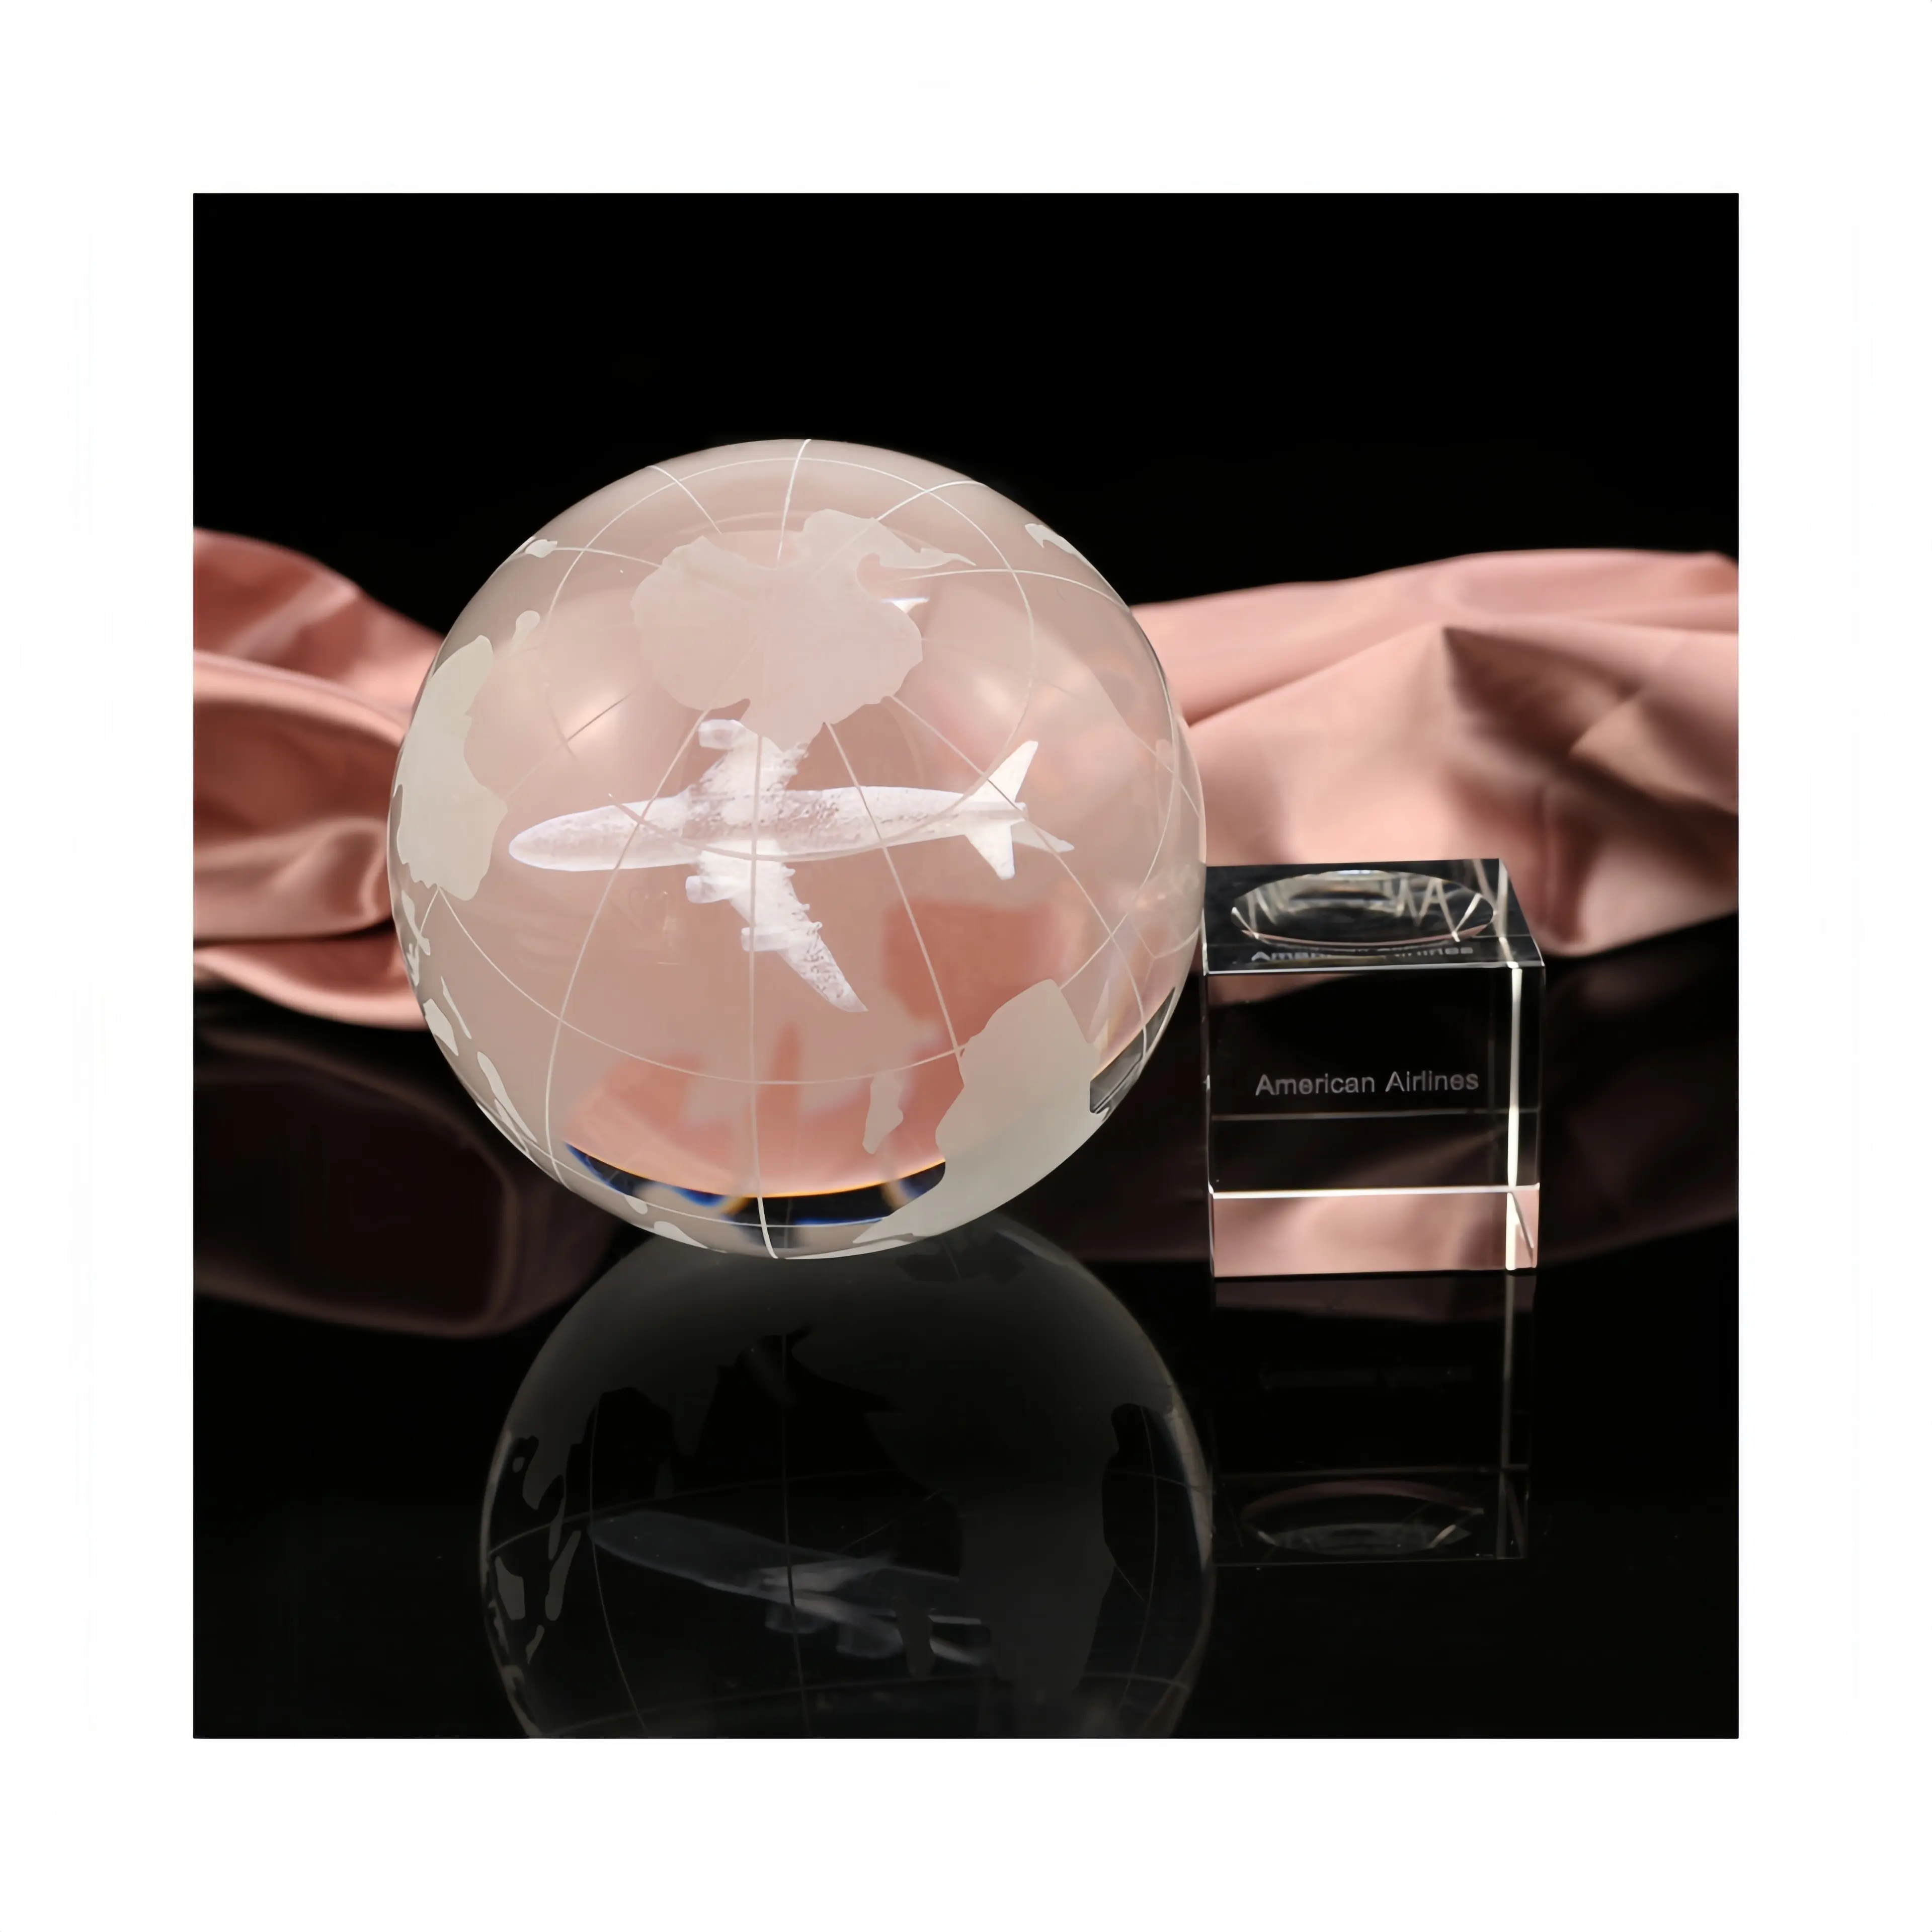 2d kazınmış dünya haritası topu özel 3d lazer gravür uçak modeli kristal 3d lazer küre